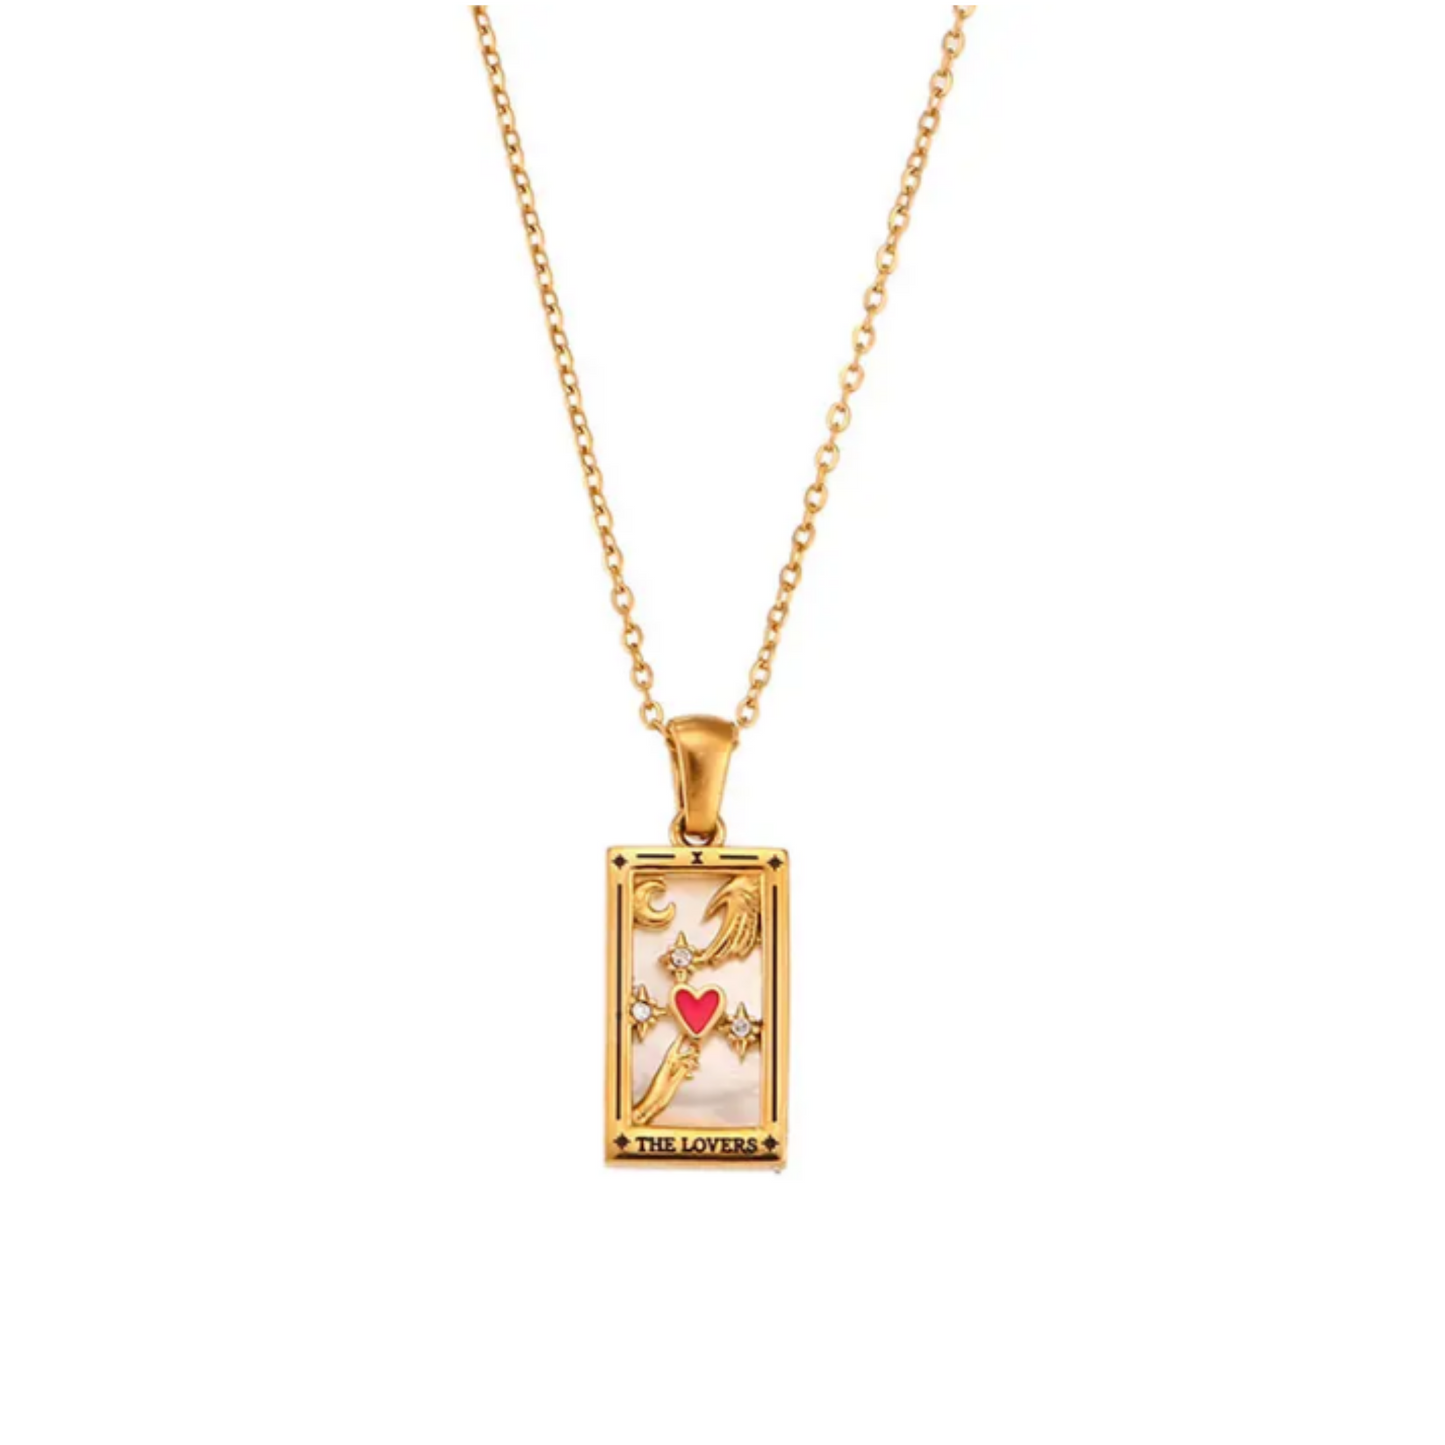 The Empress 18K Gold Plated Tarot Card Necklace